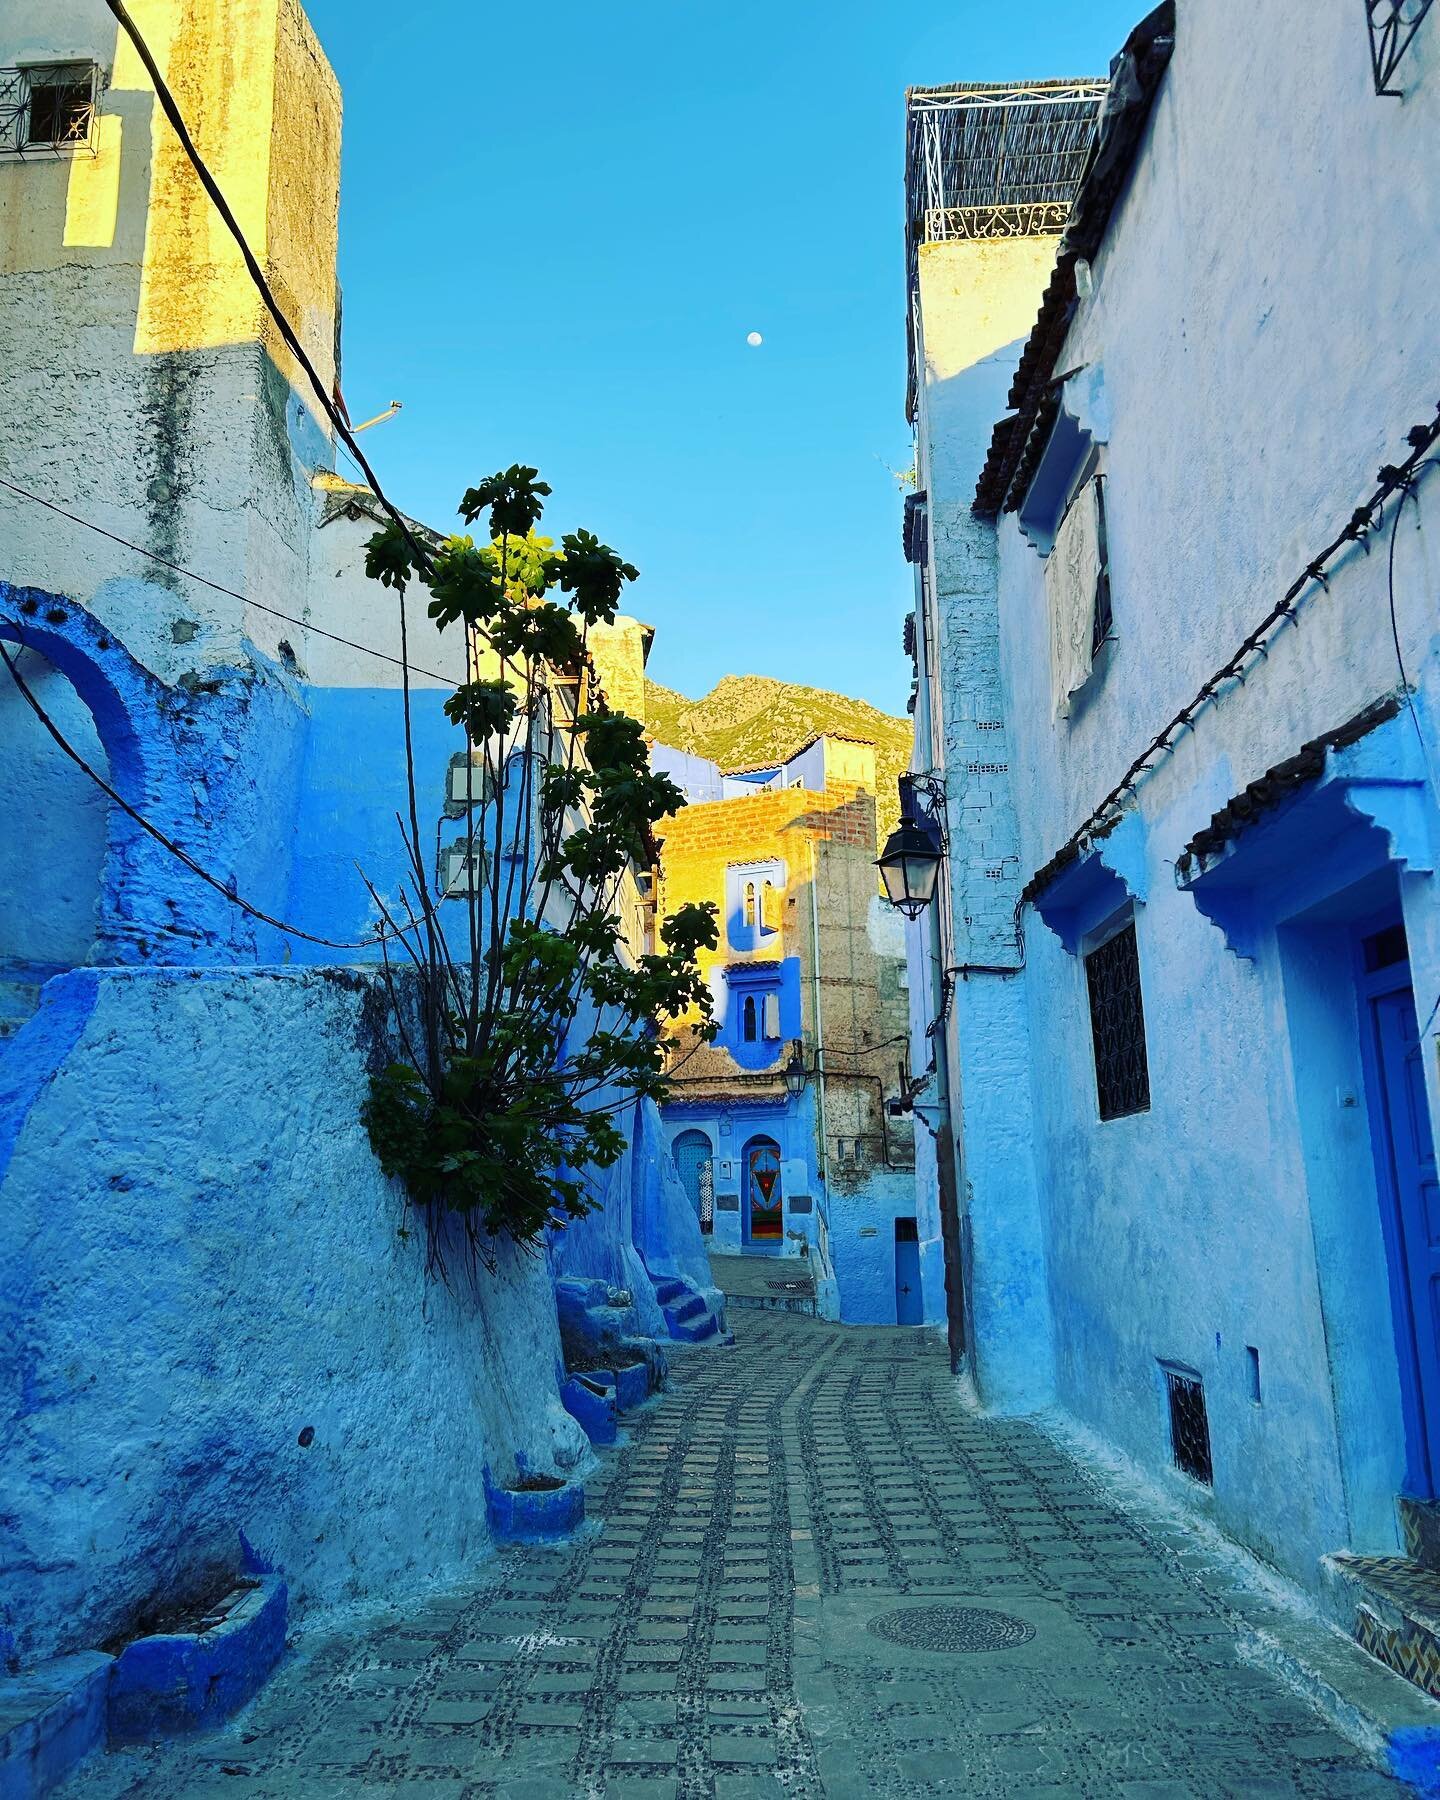 #chefchaouen the blue city! #morocco #travelgram #traveltheworld